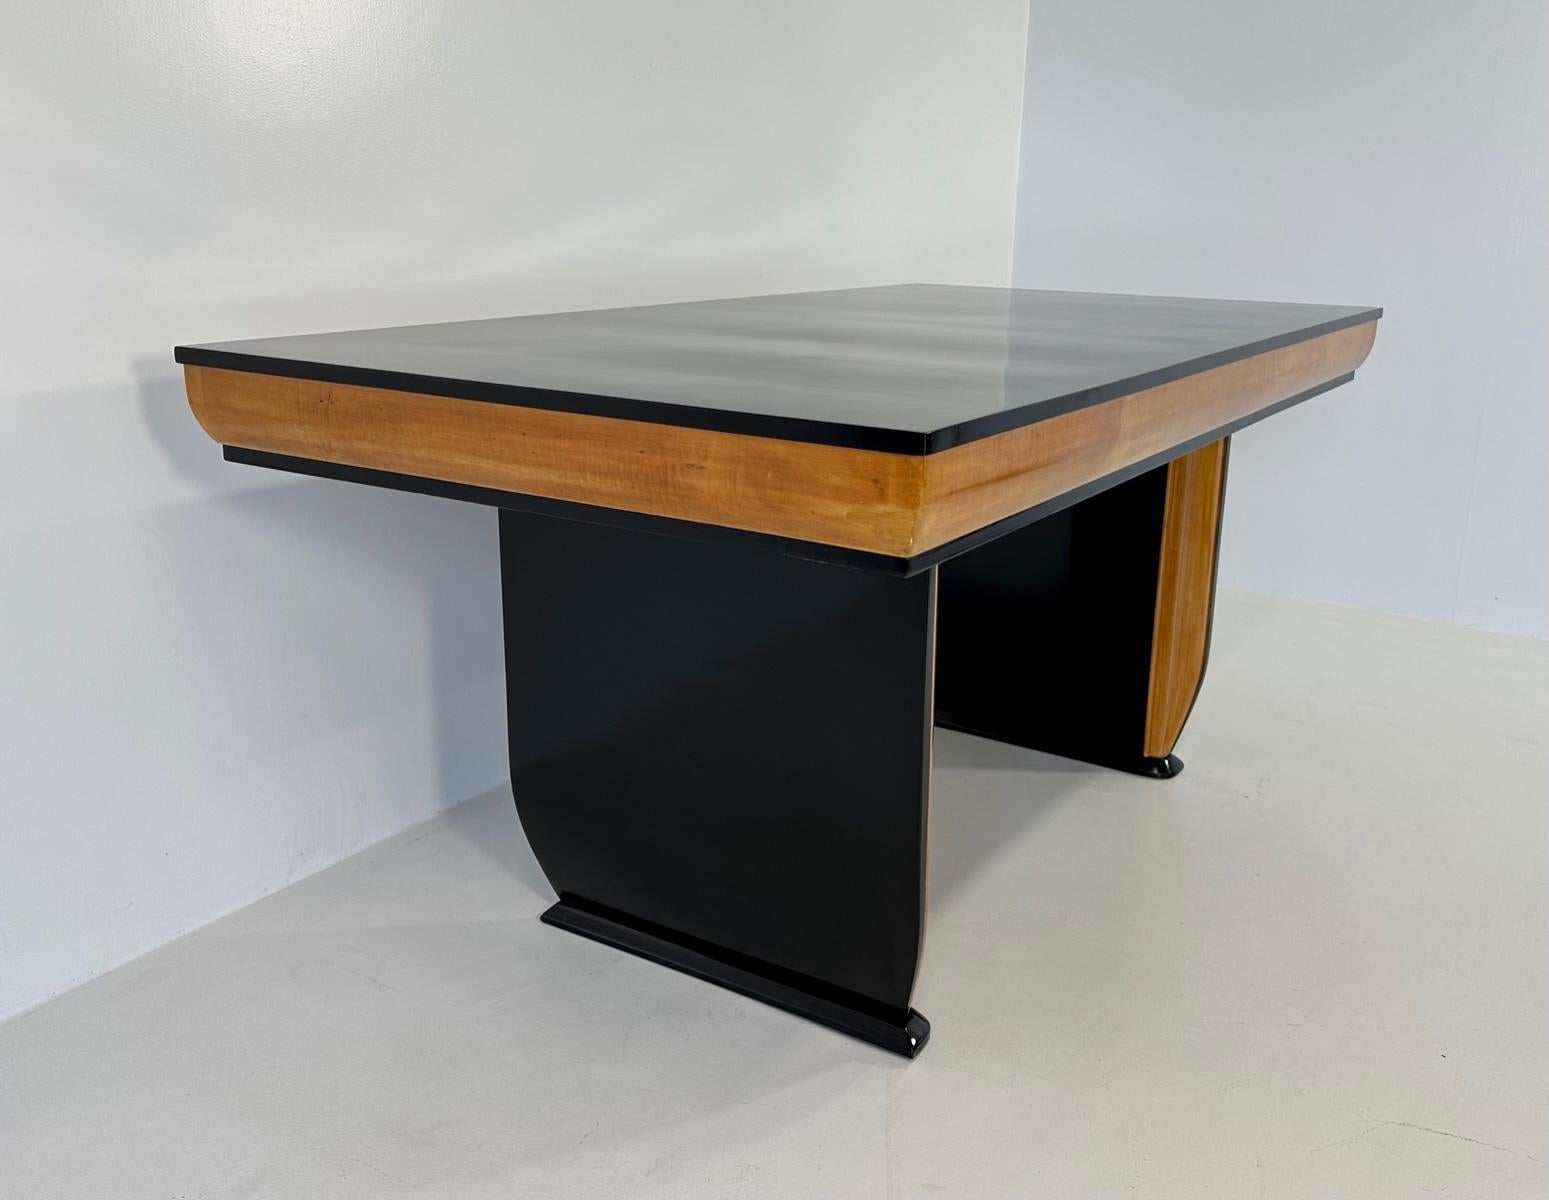 Italian Art Deco Black Lacquer and Maple Table, attr. to Borsani, 1940s For Sale 2